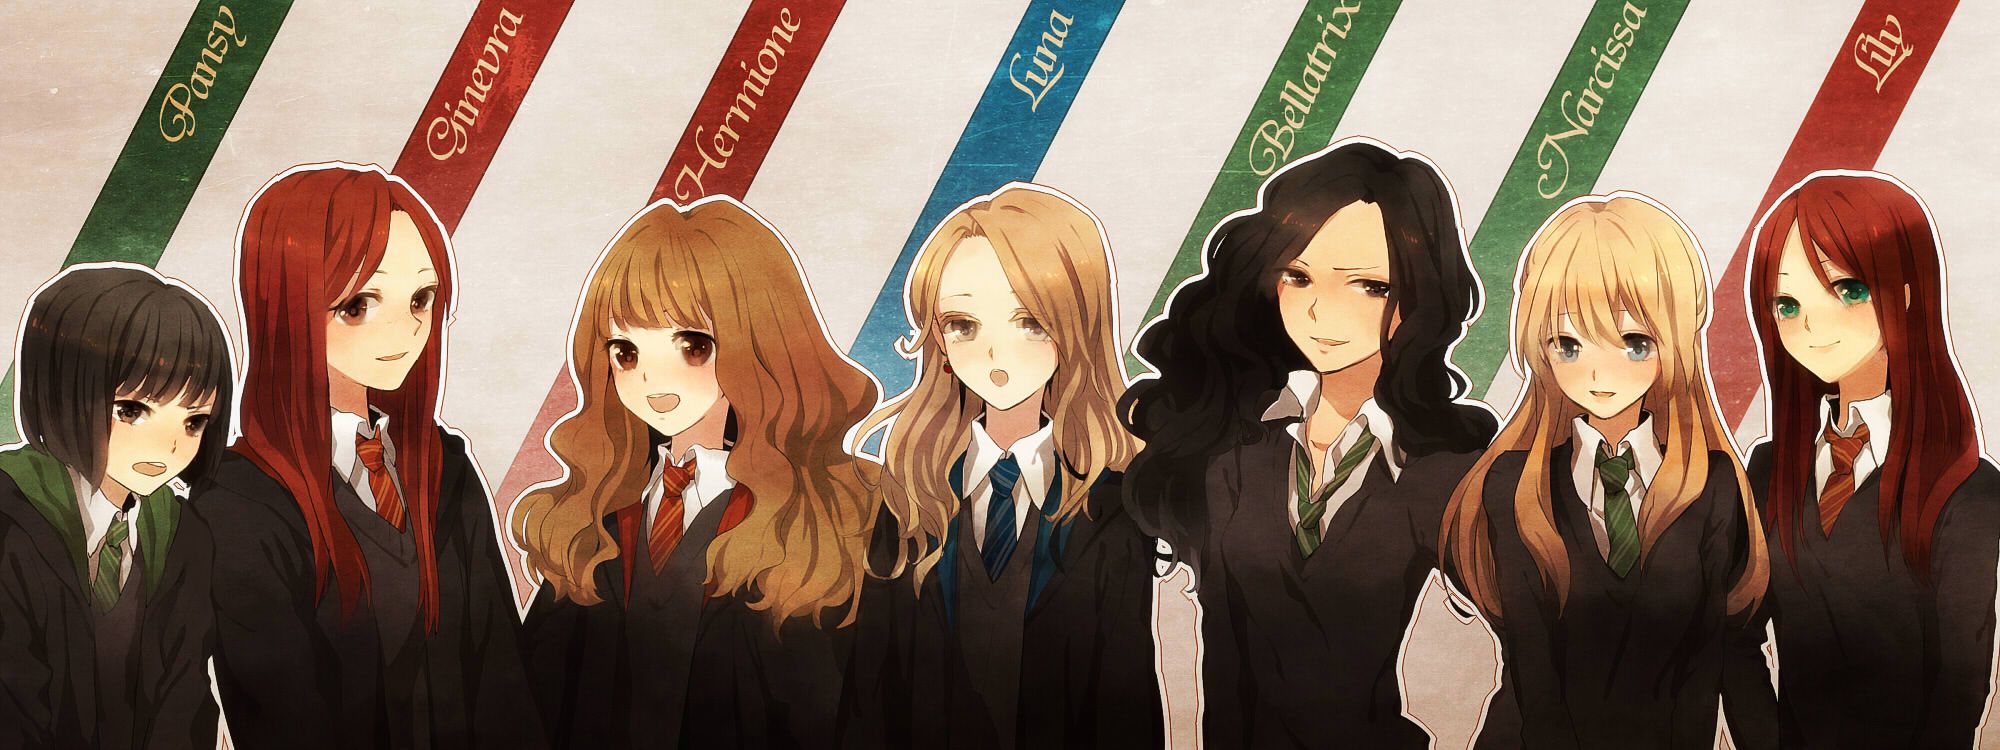 Harry Potter Anime Image Board